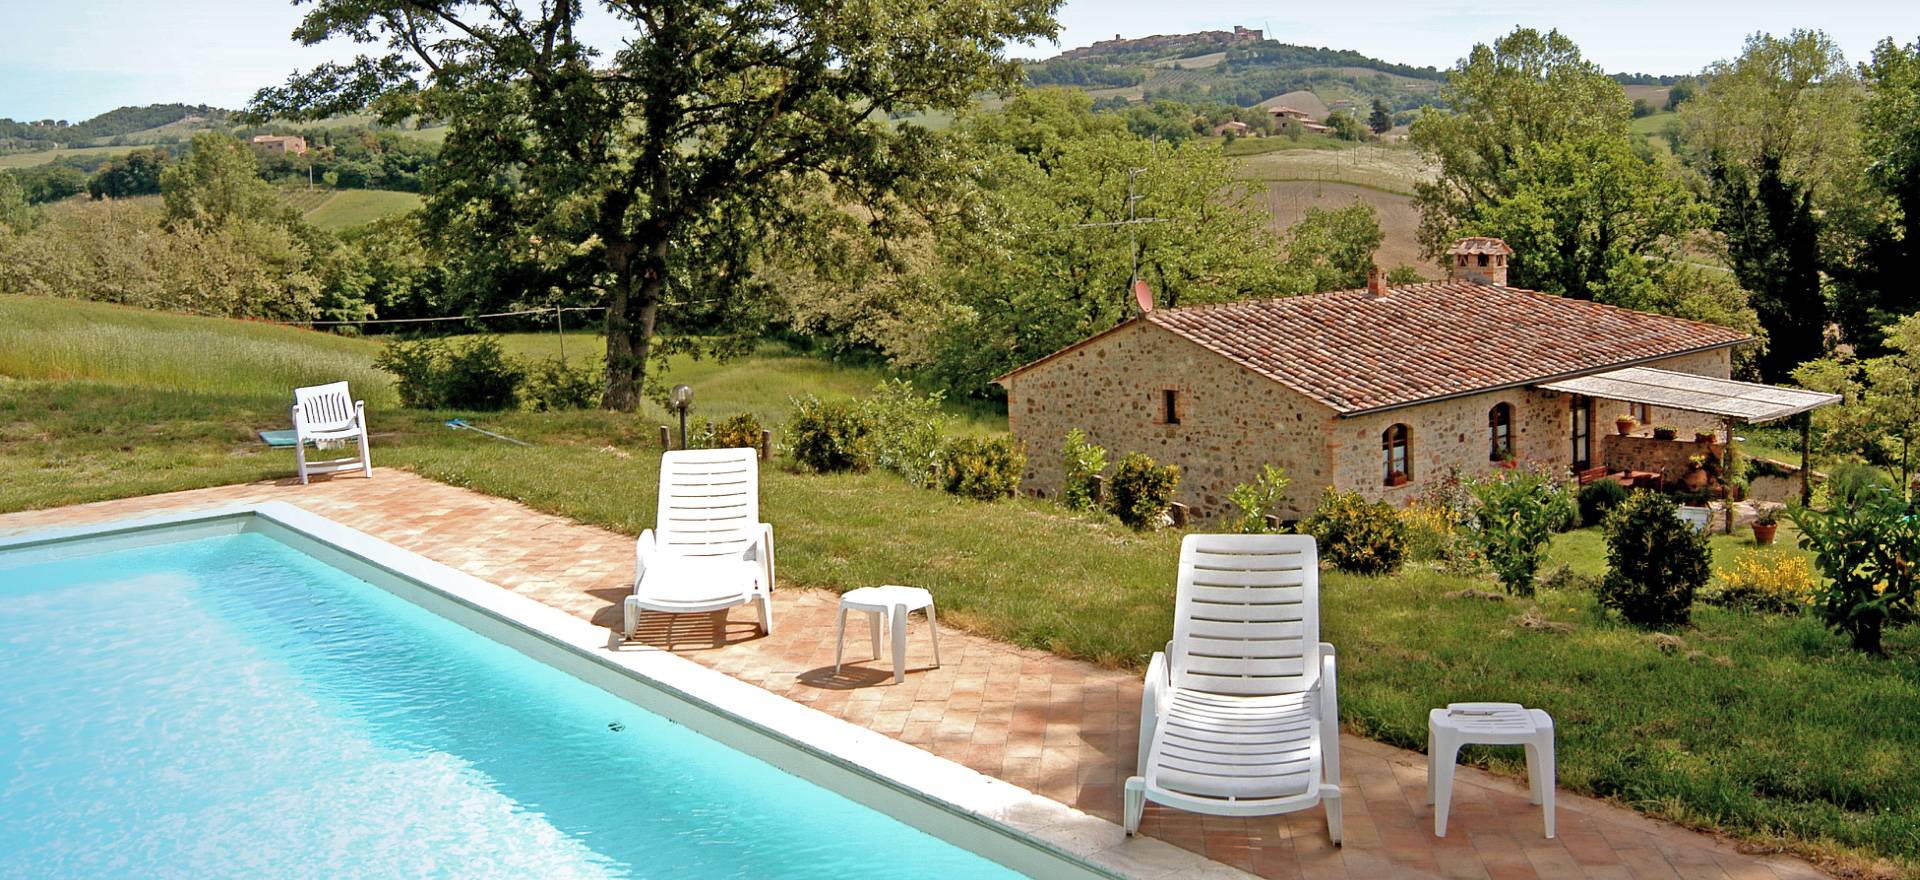 Agriturismo Toskana, zwei Häuser mit privatem Pool